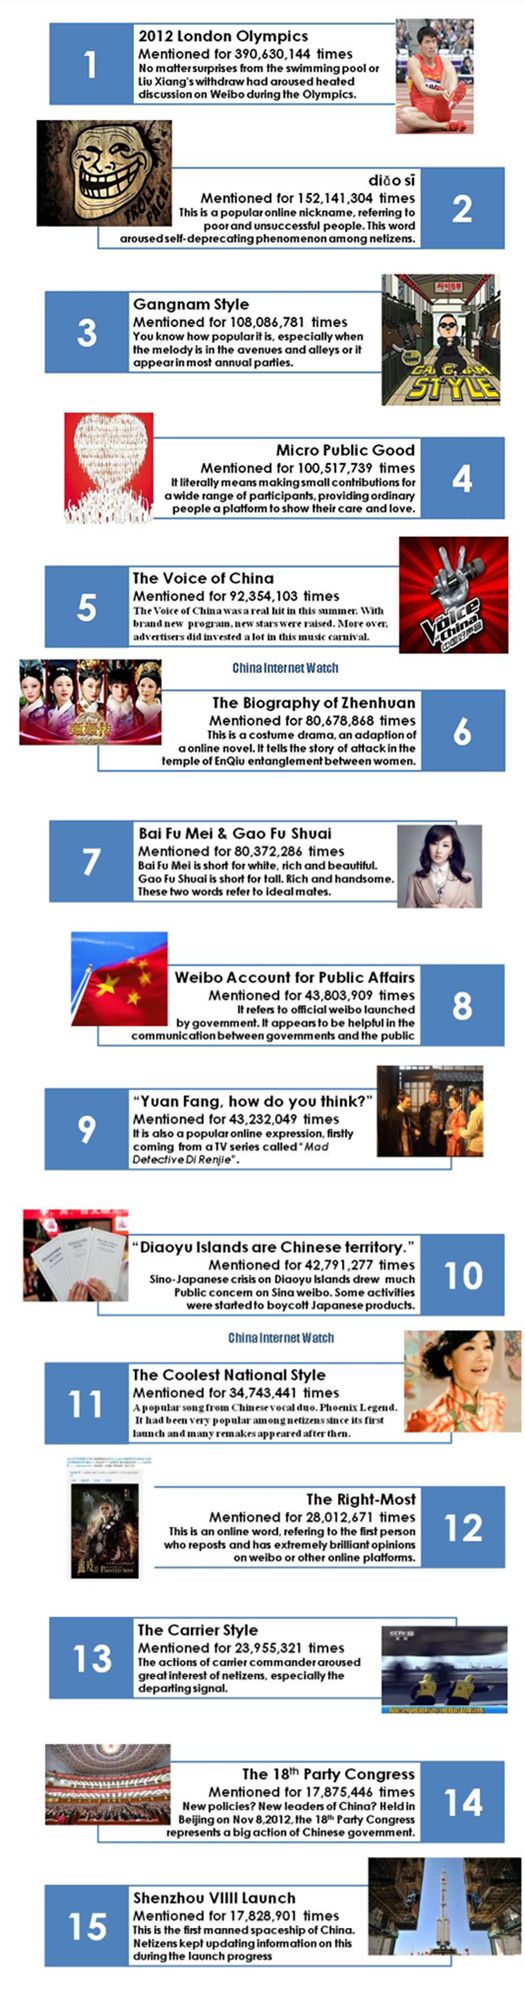 Top 15 Most Popular Topics on Sina Weibo